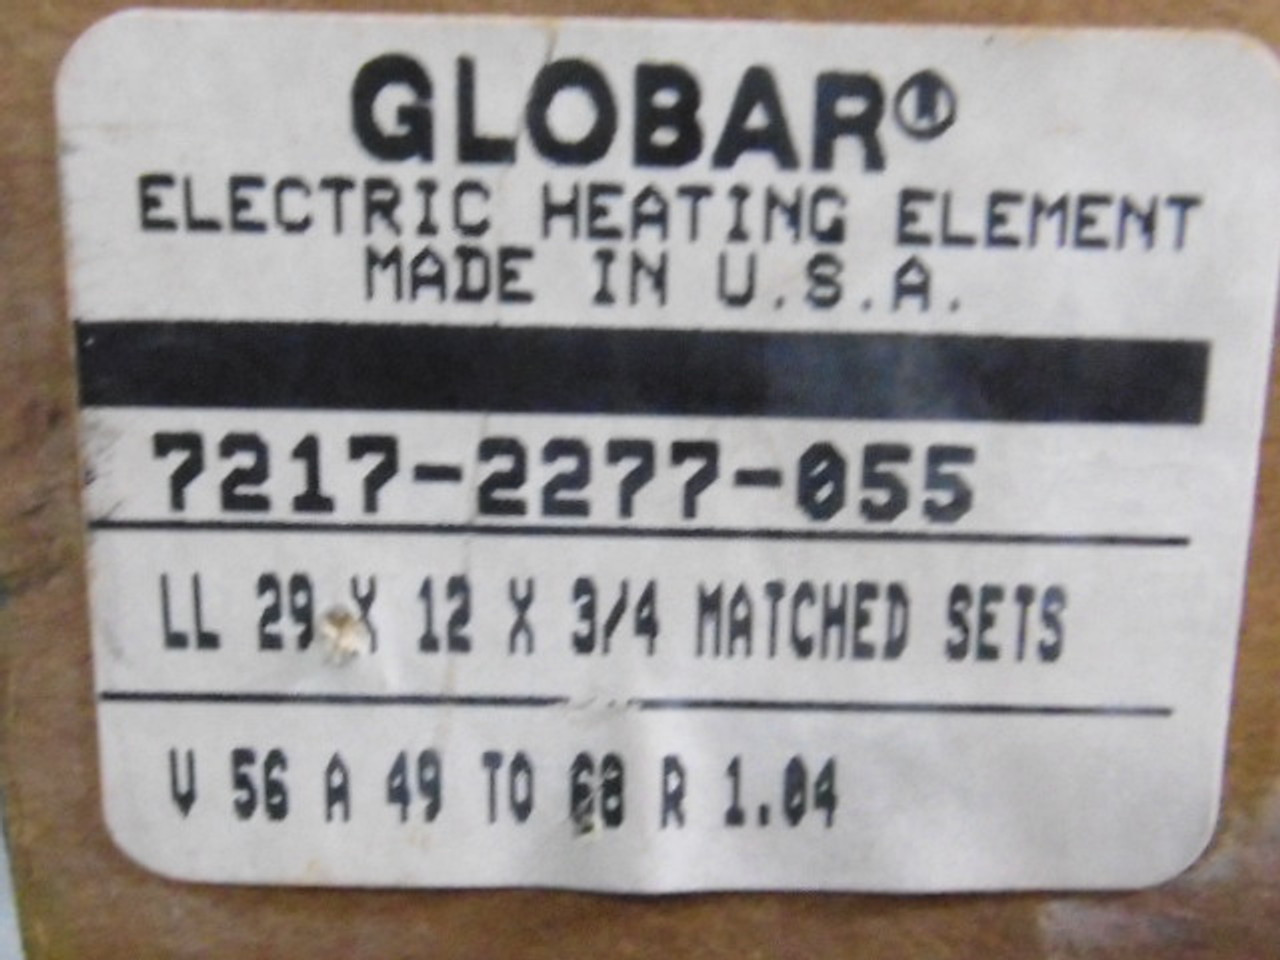 Globar 7217-2277-055 Electric Heating Element LL29x12x3/4 ! NEW !